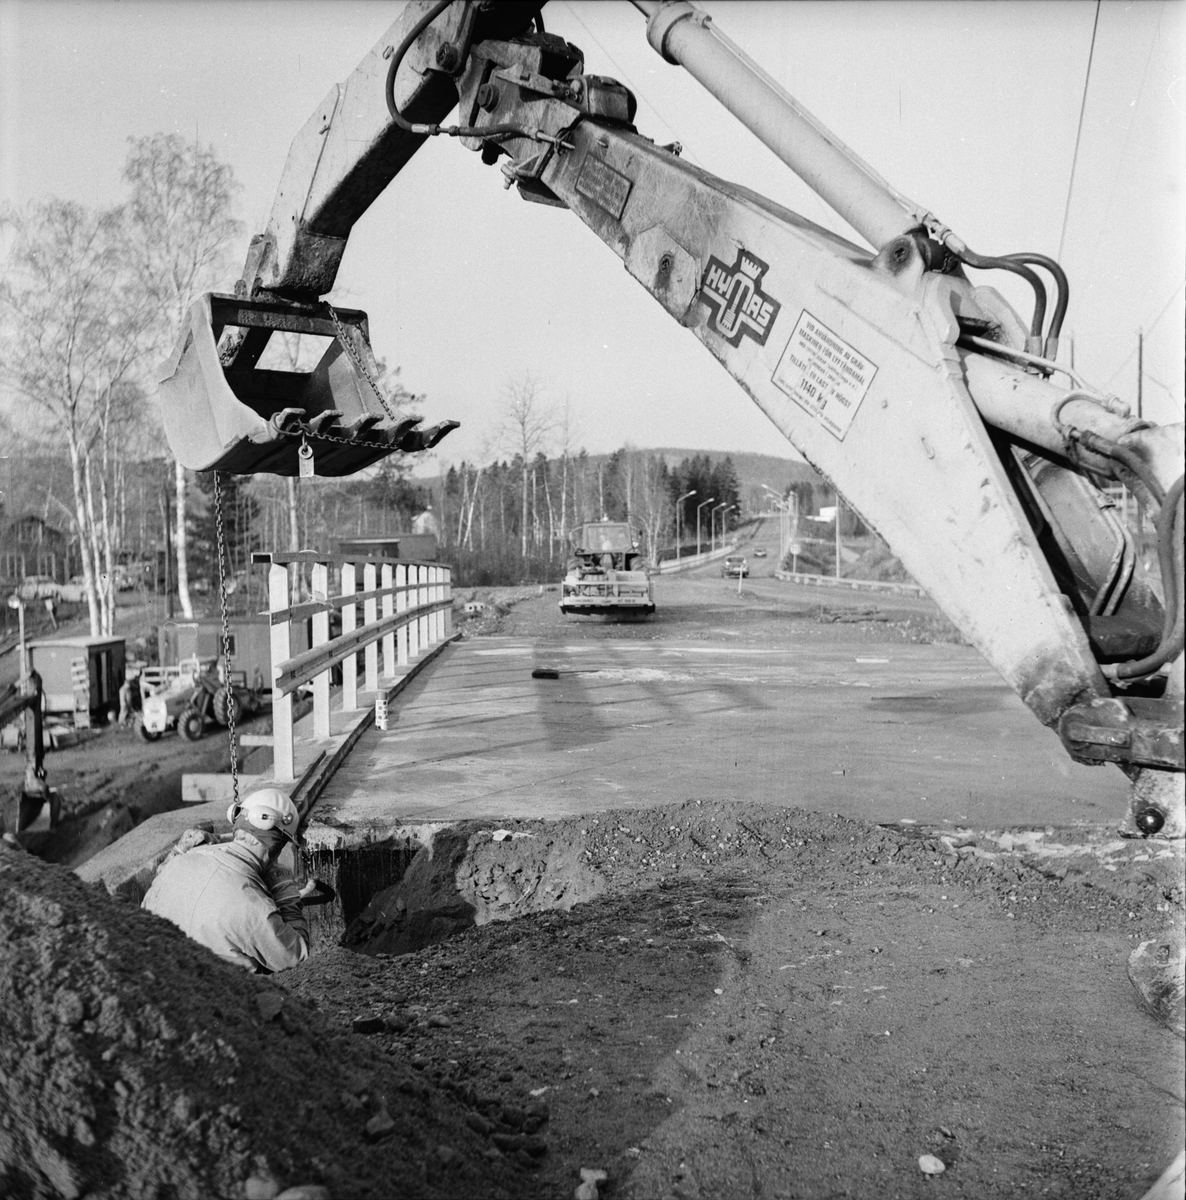 Nya bron i Forsbro.
Oktober 1973